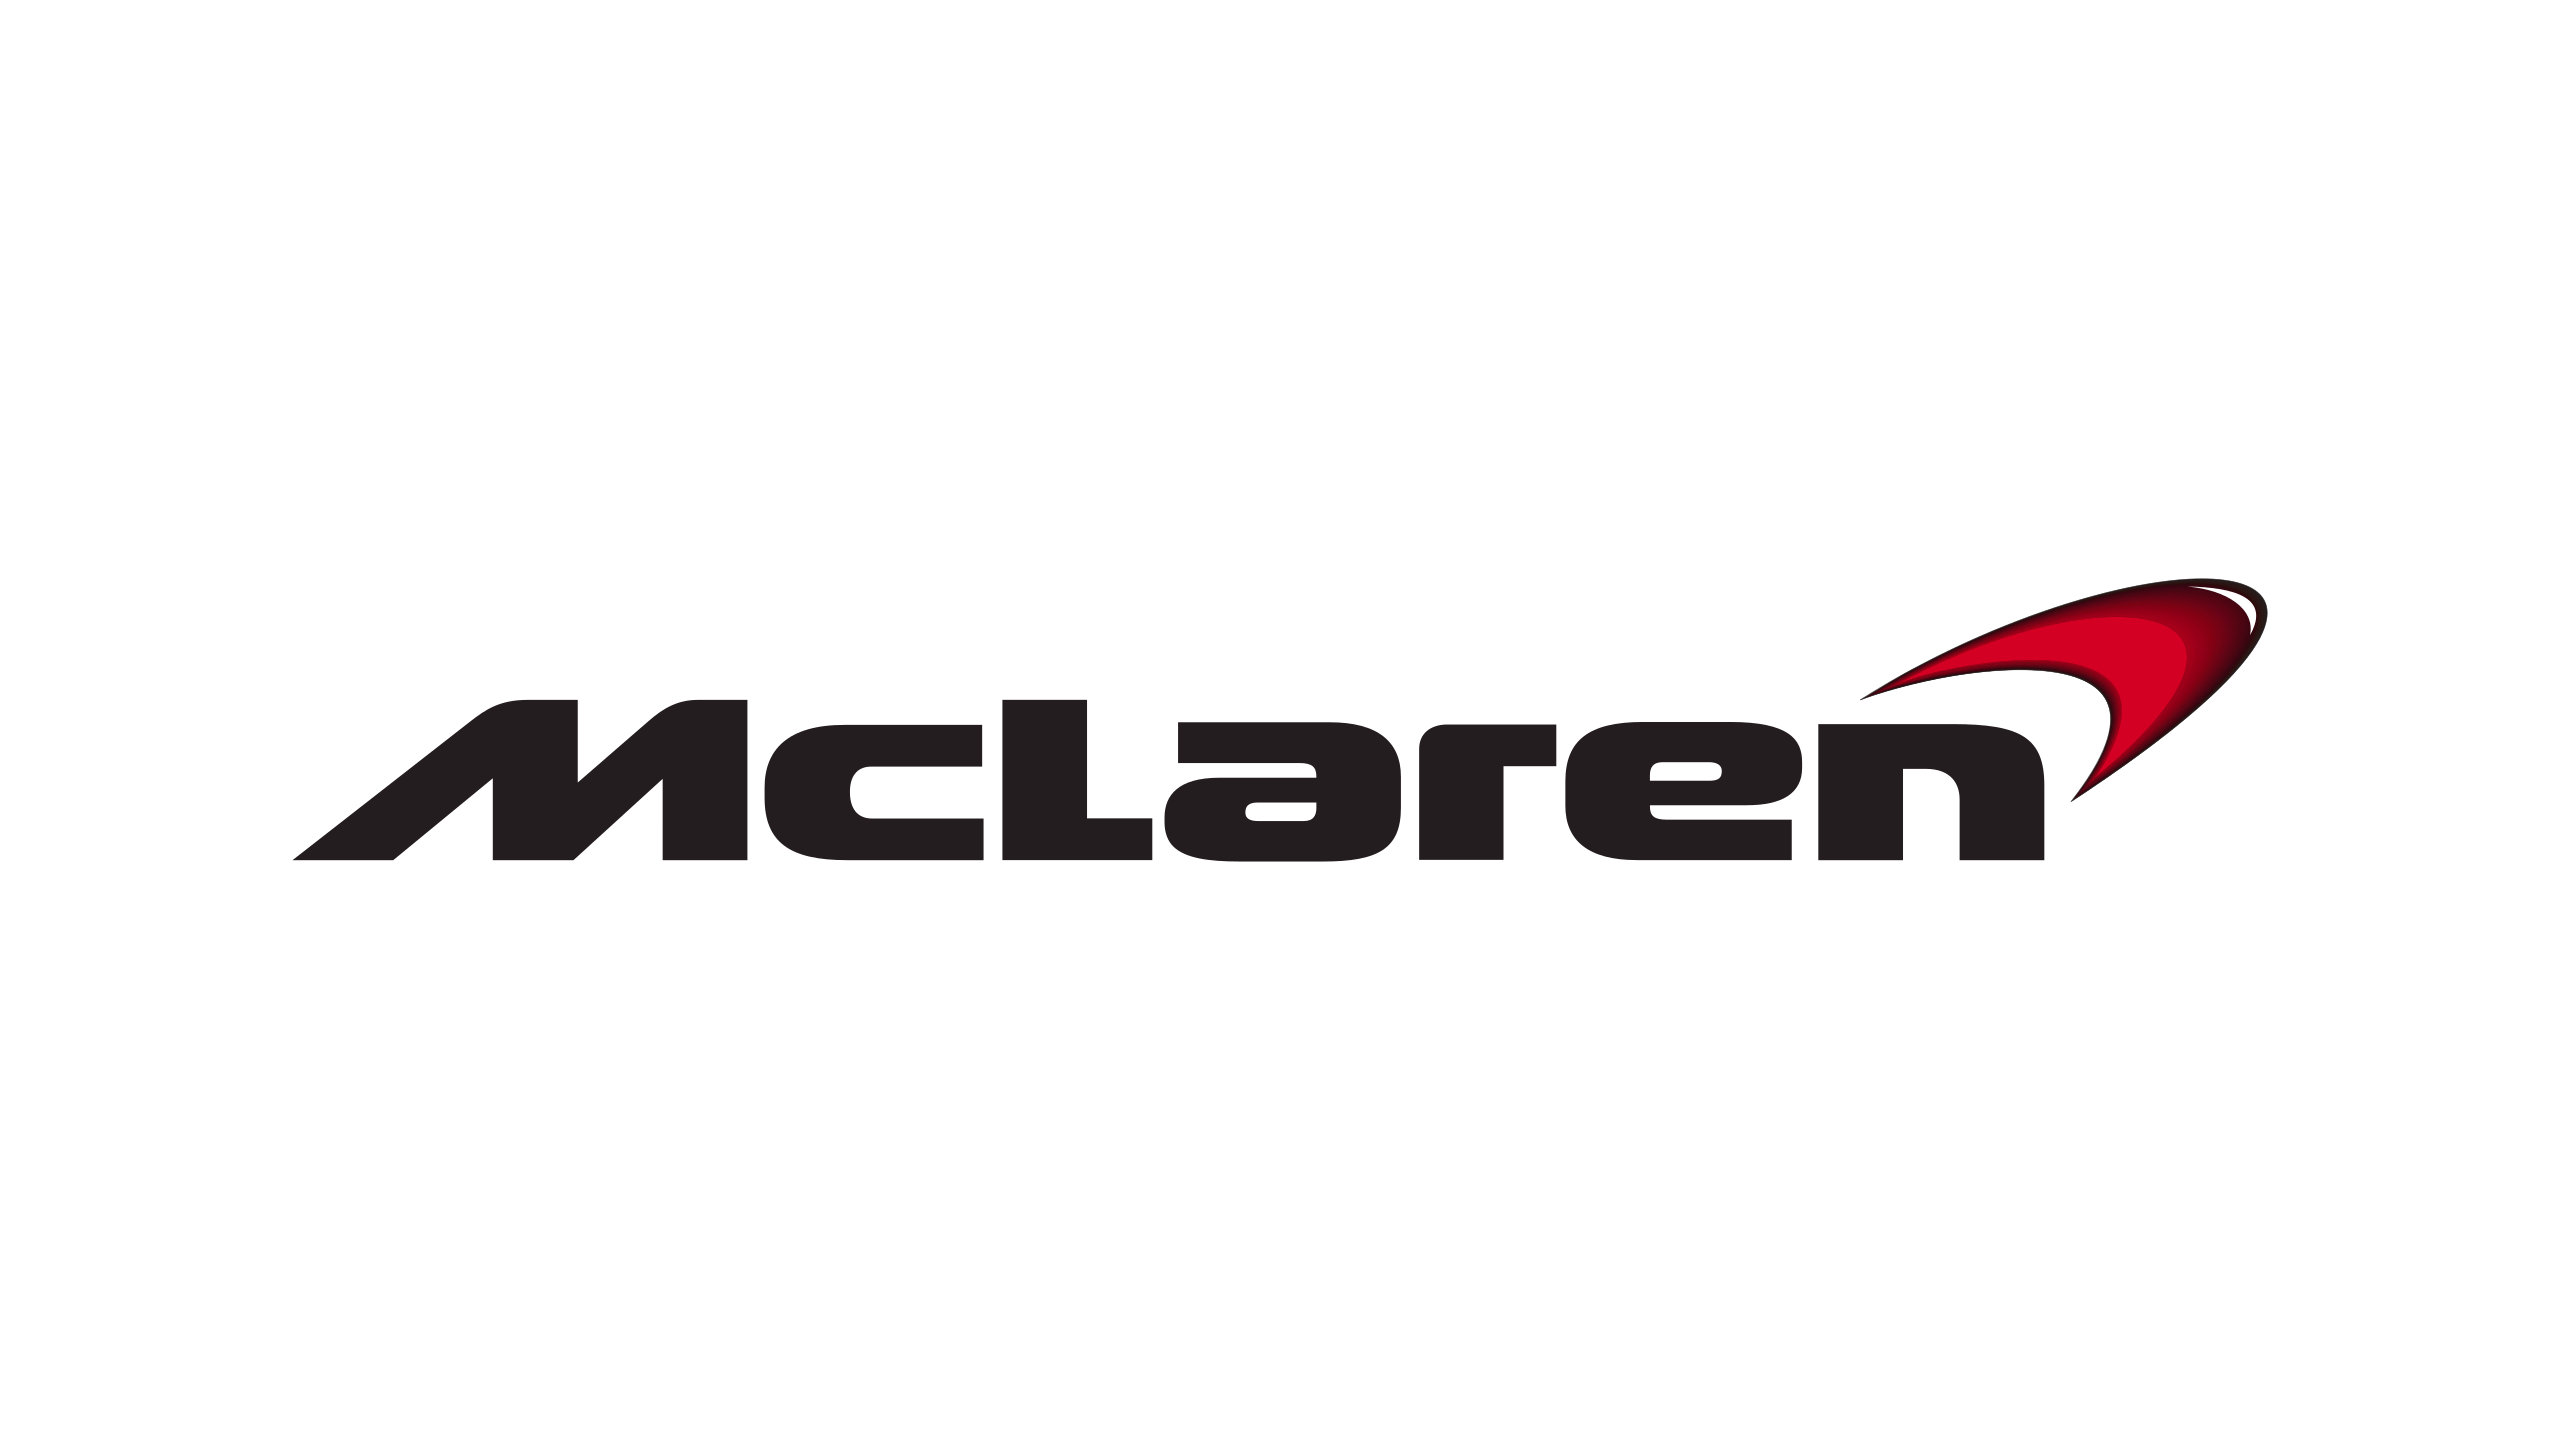 download mclaren f1 2016 for free